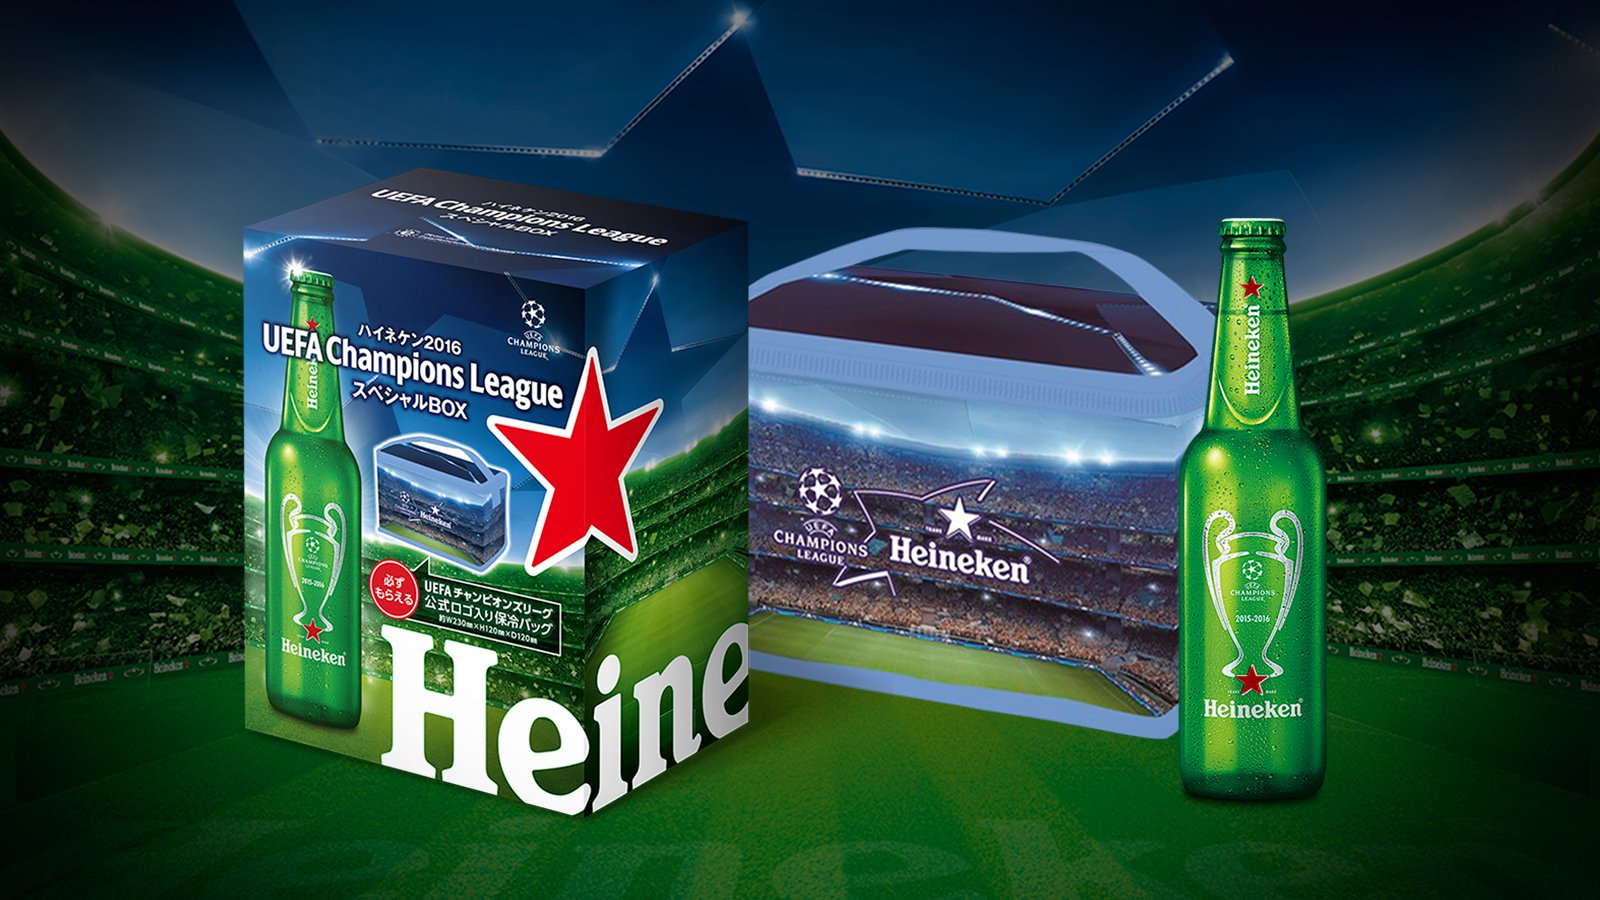 Heineken Japan در توییتر Uefaチャンピオンズリーグ スペシャルbox発売中 オリジナル保冷バッグが付いたハイネケン4本パックをゲットして決勝戦で盛り上がろう 詳しくはこちら T Co Yfqv0vpvkb ハイネケン16